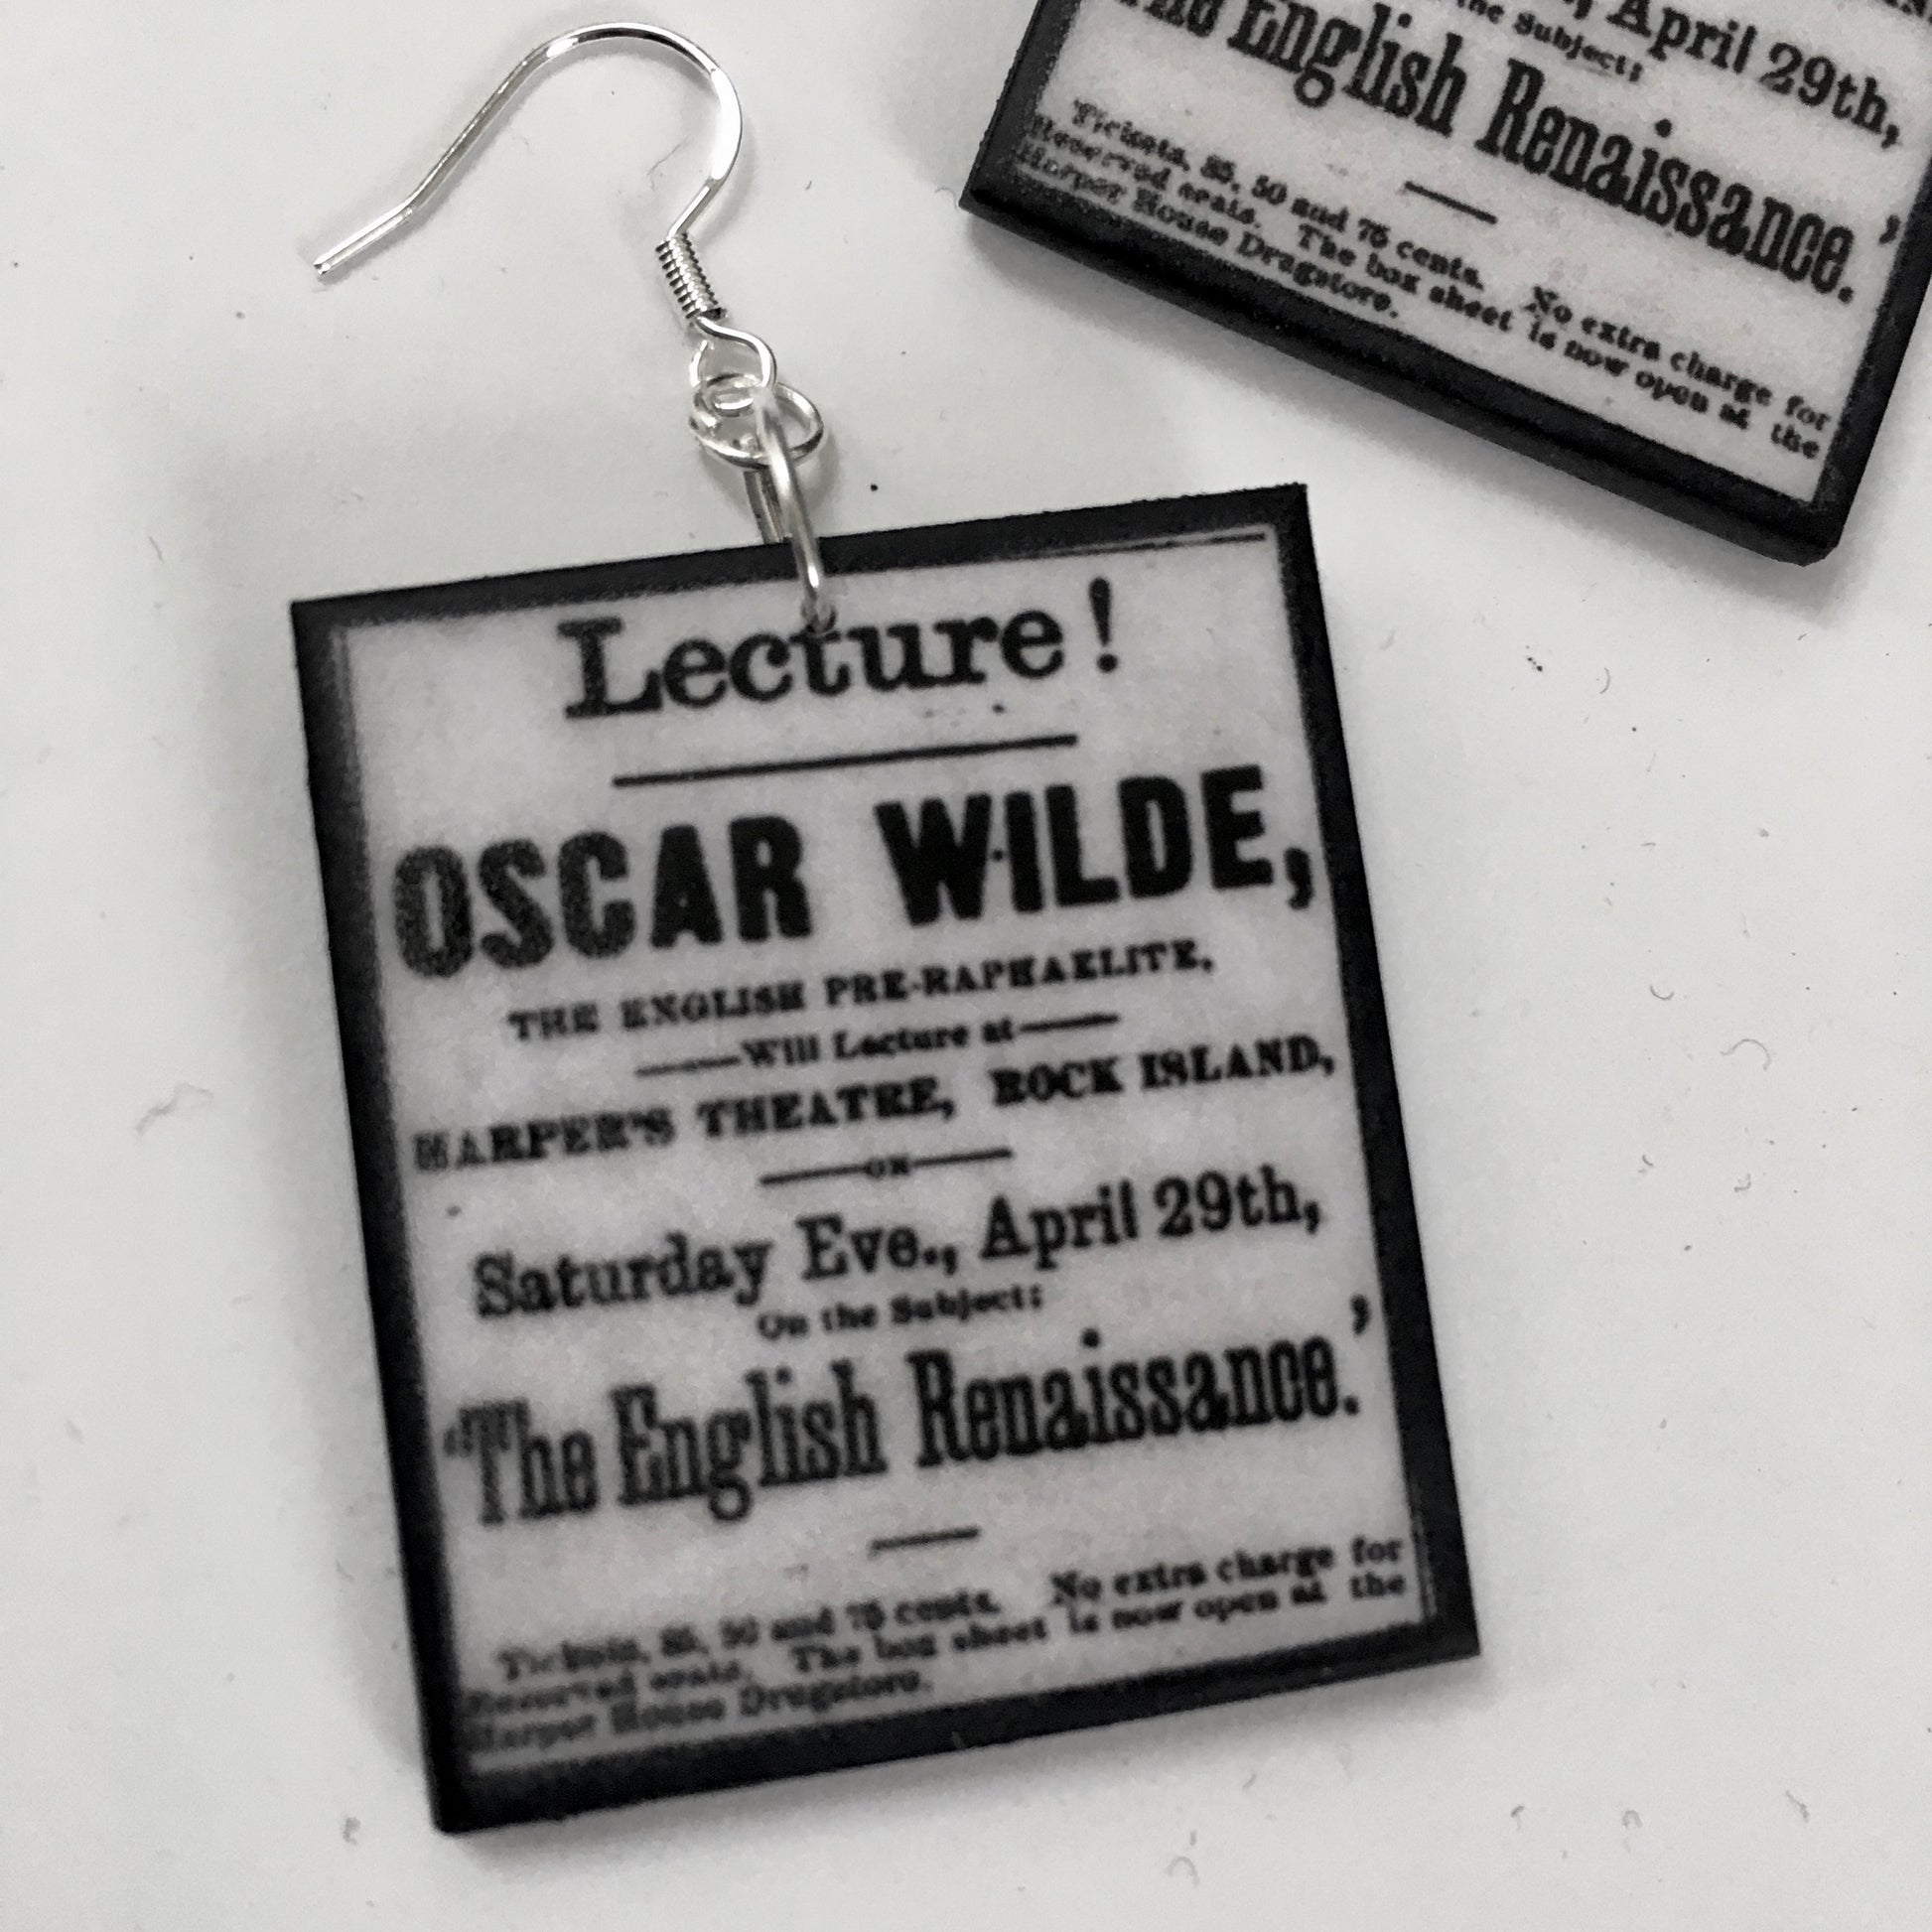 English Renaissance, Oscar Wilde Lectures, newspaper art earrings. Handmade by Obljewellery 